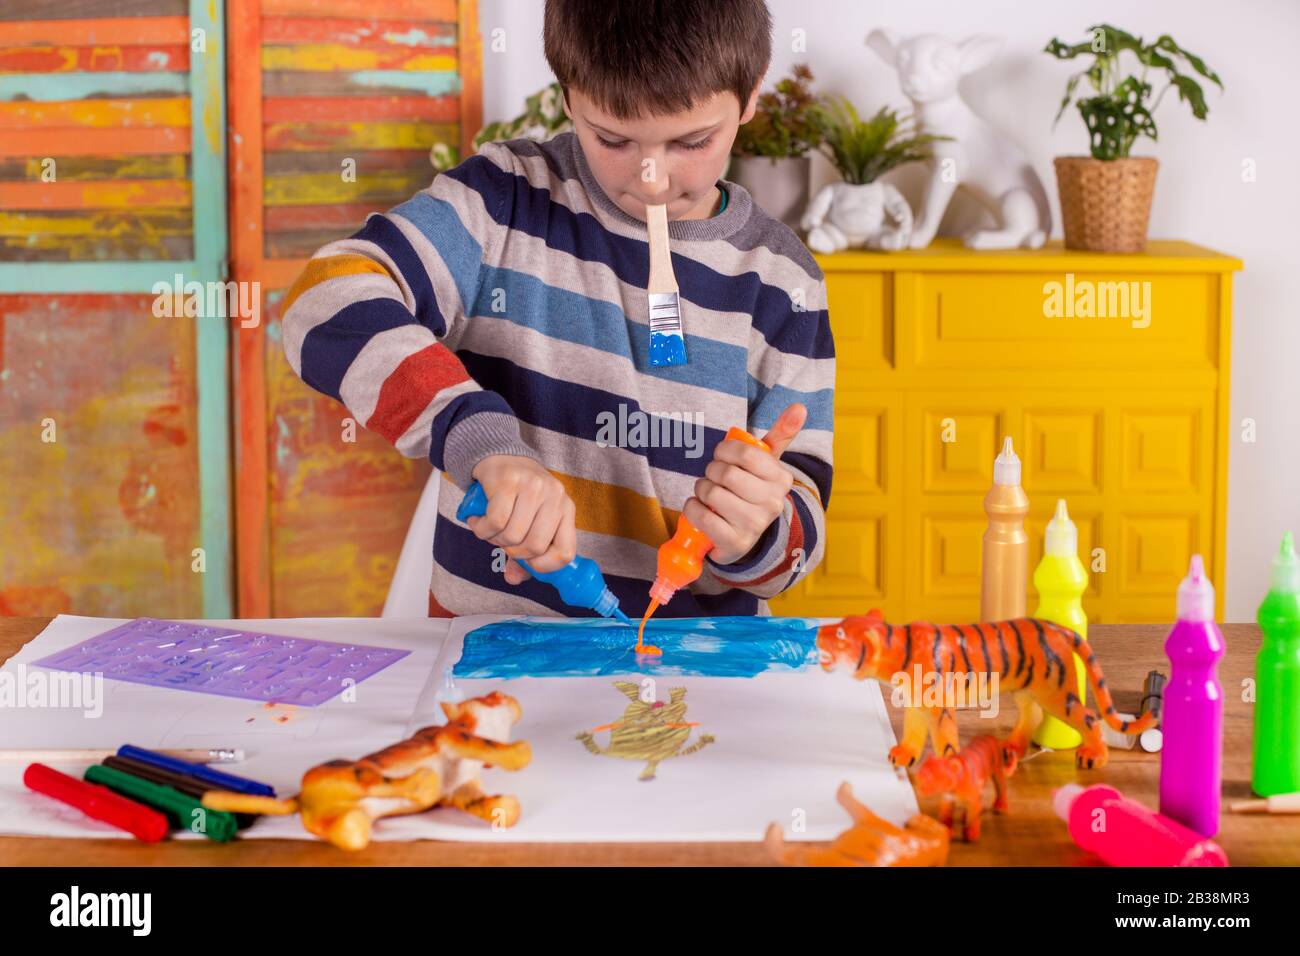 Boy creating artwork at home. Stock Photo